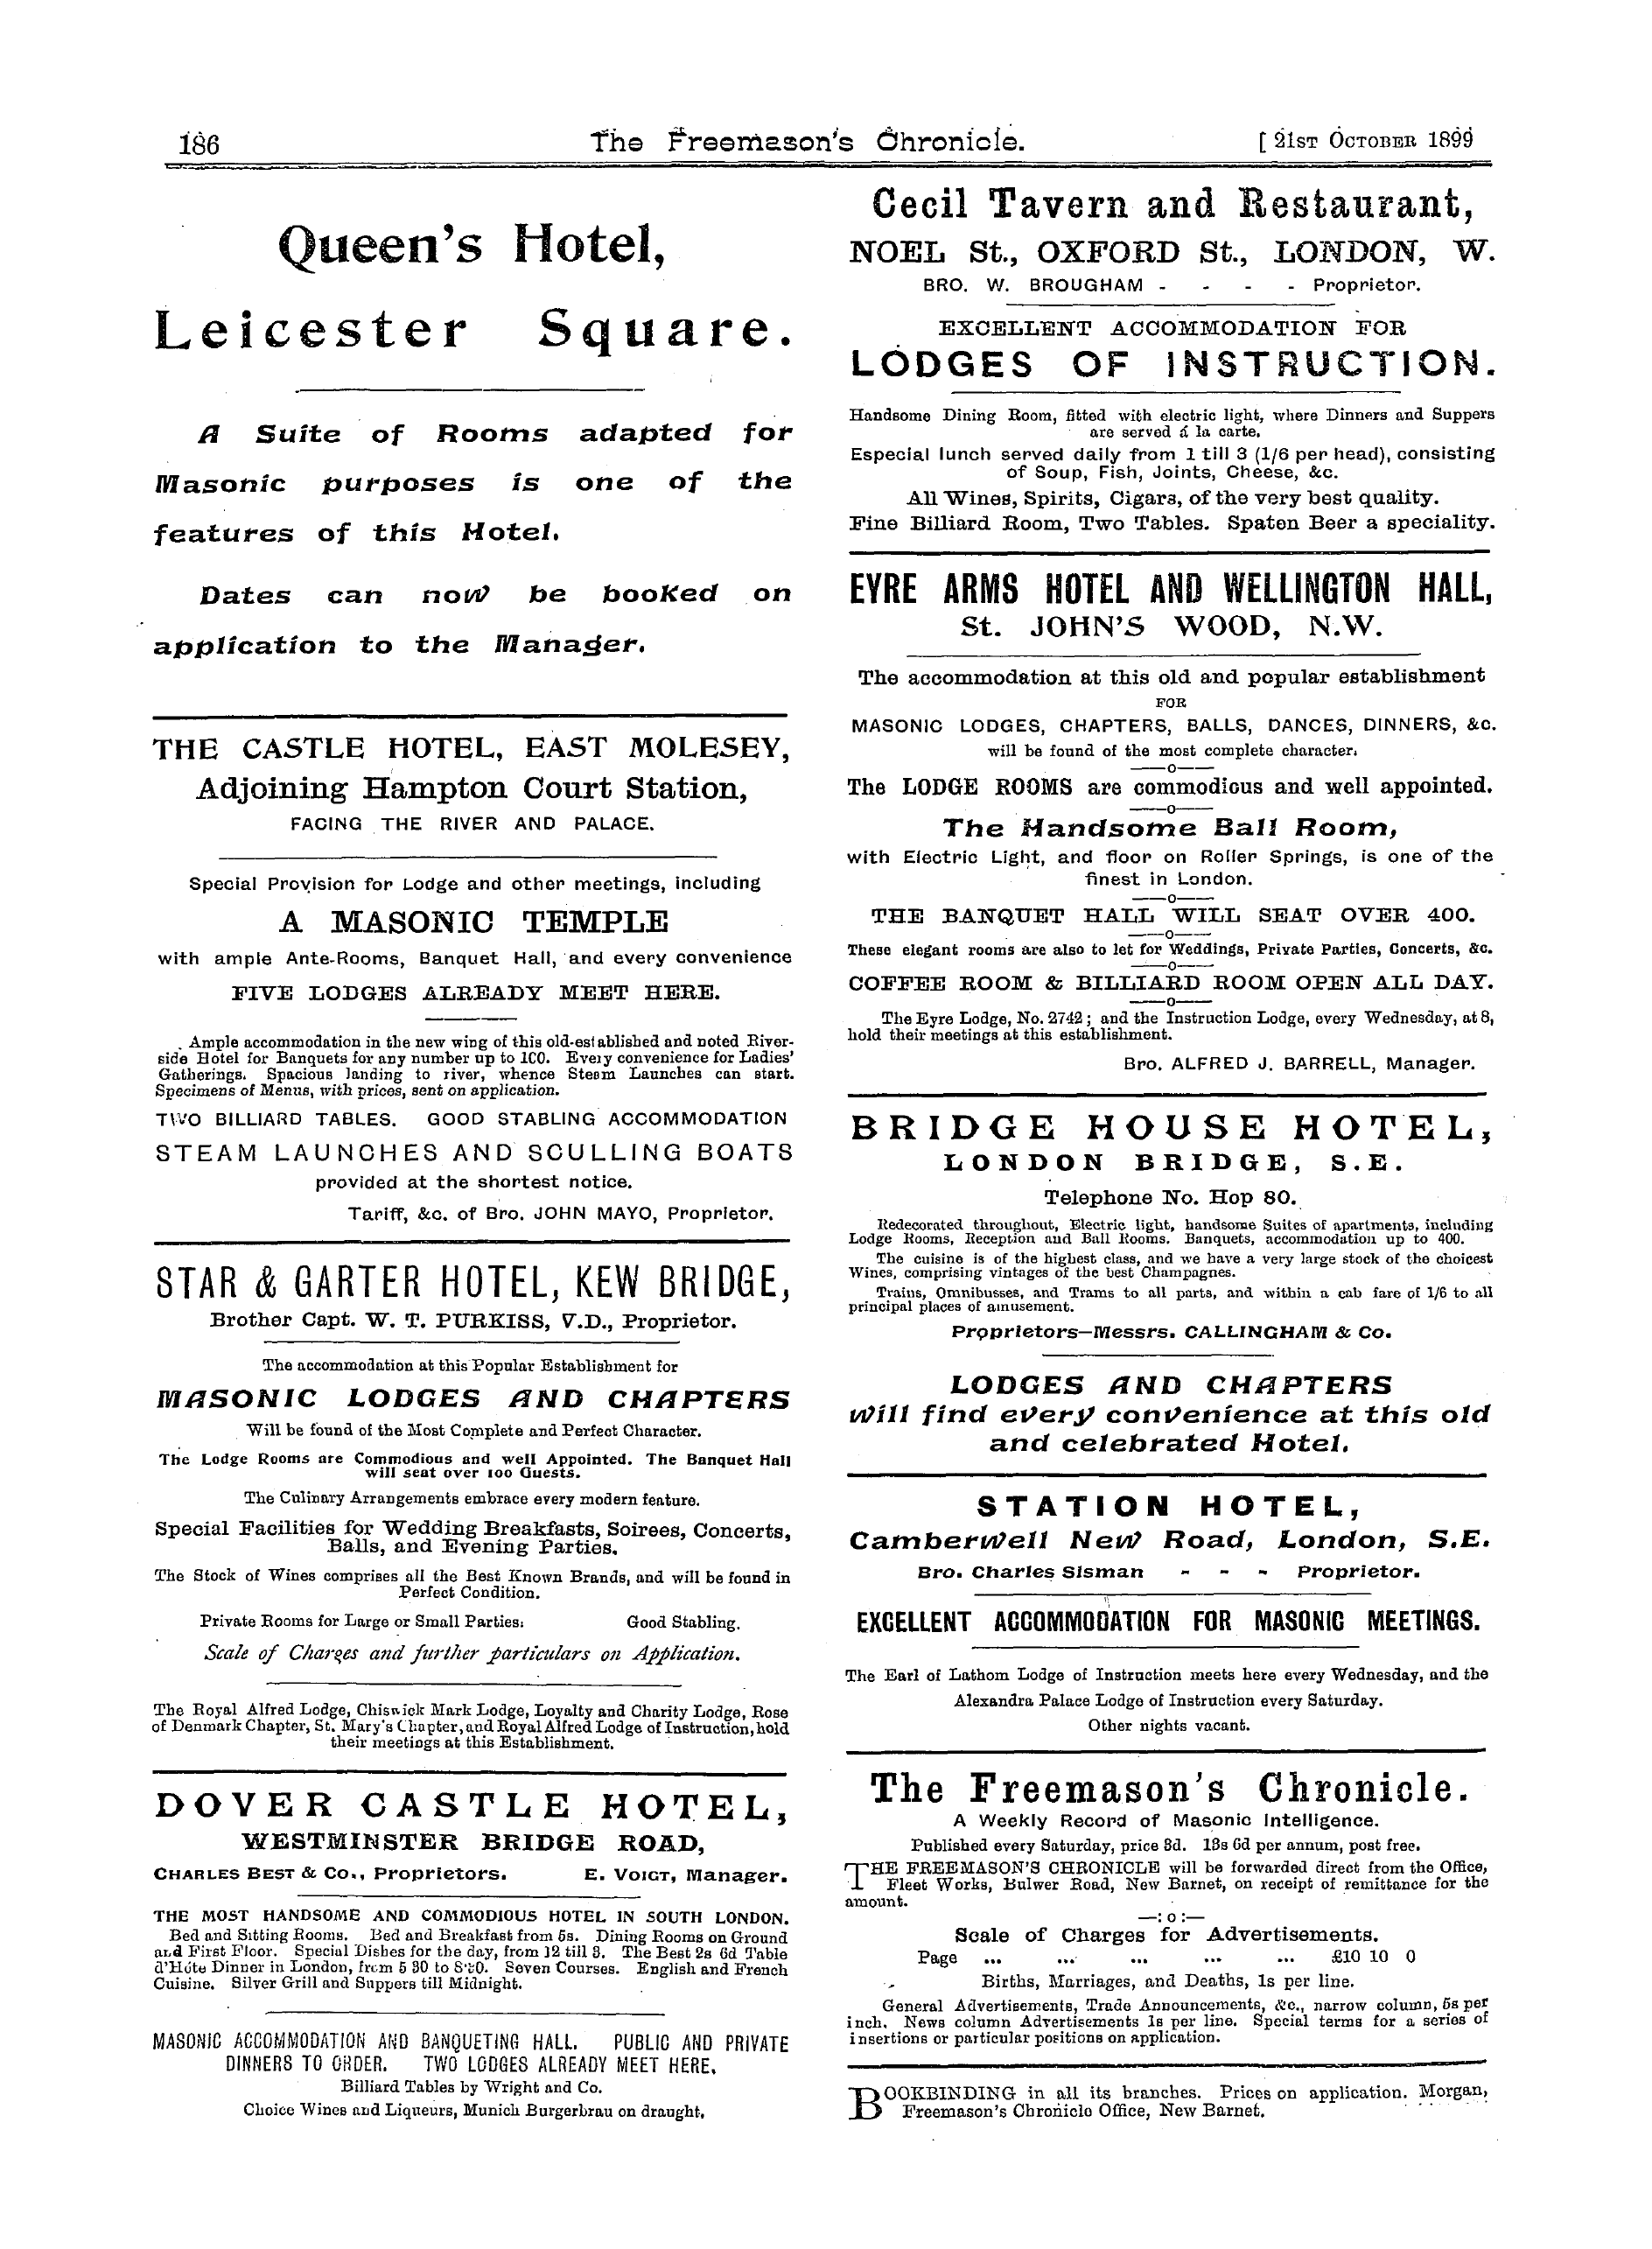 The Freemason's Chronicle: 1899-10-21 - Ad00609